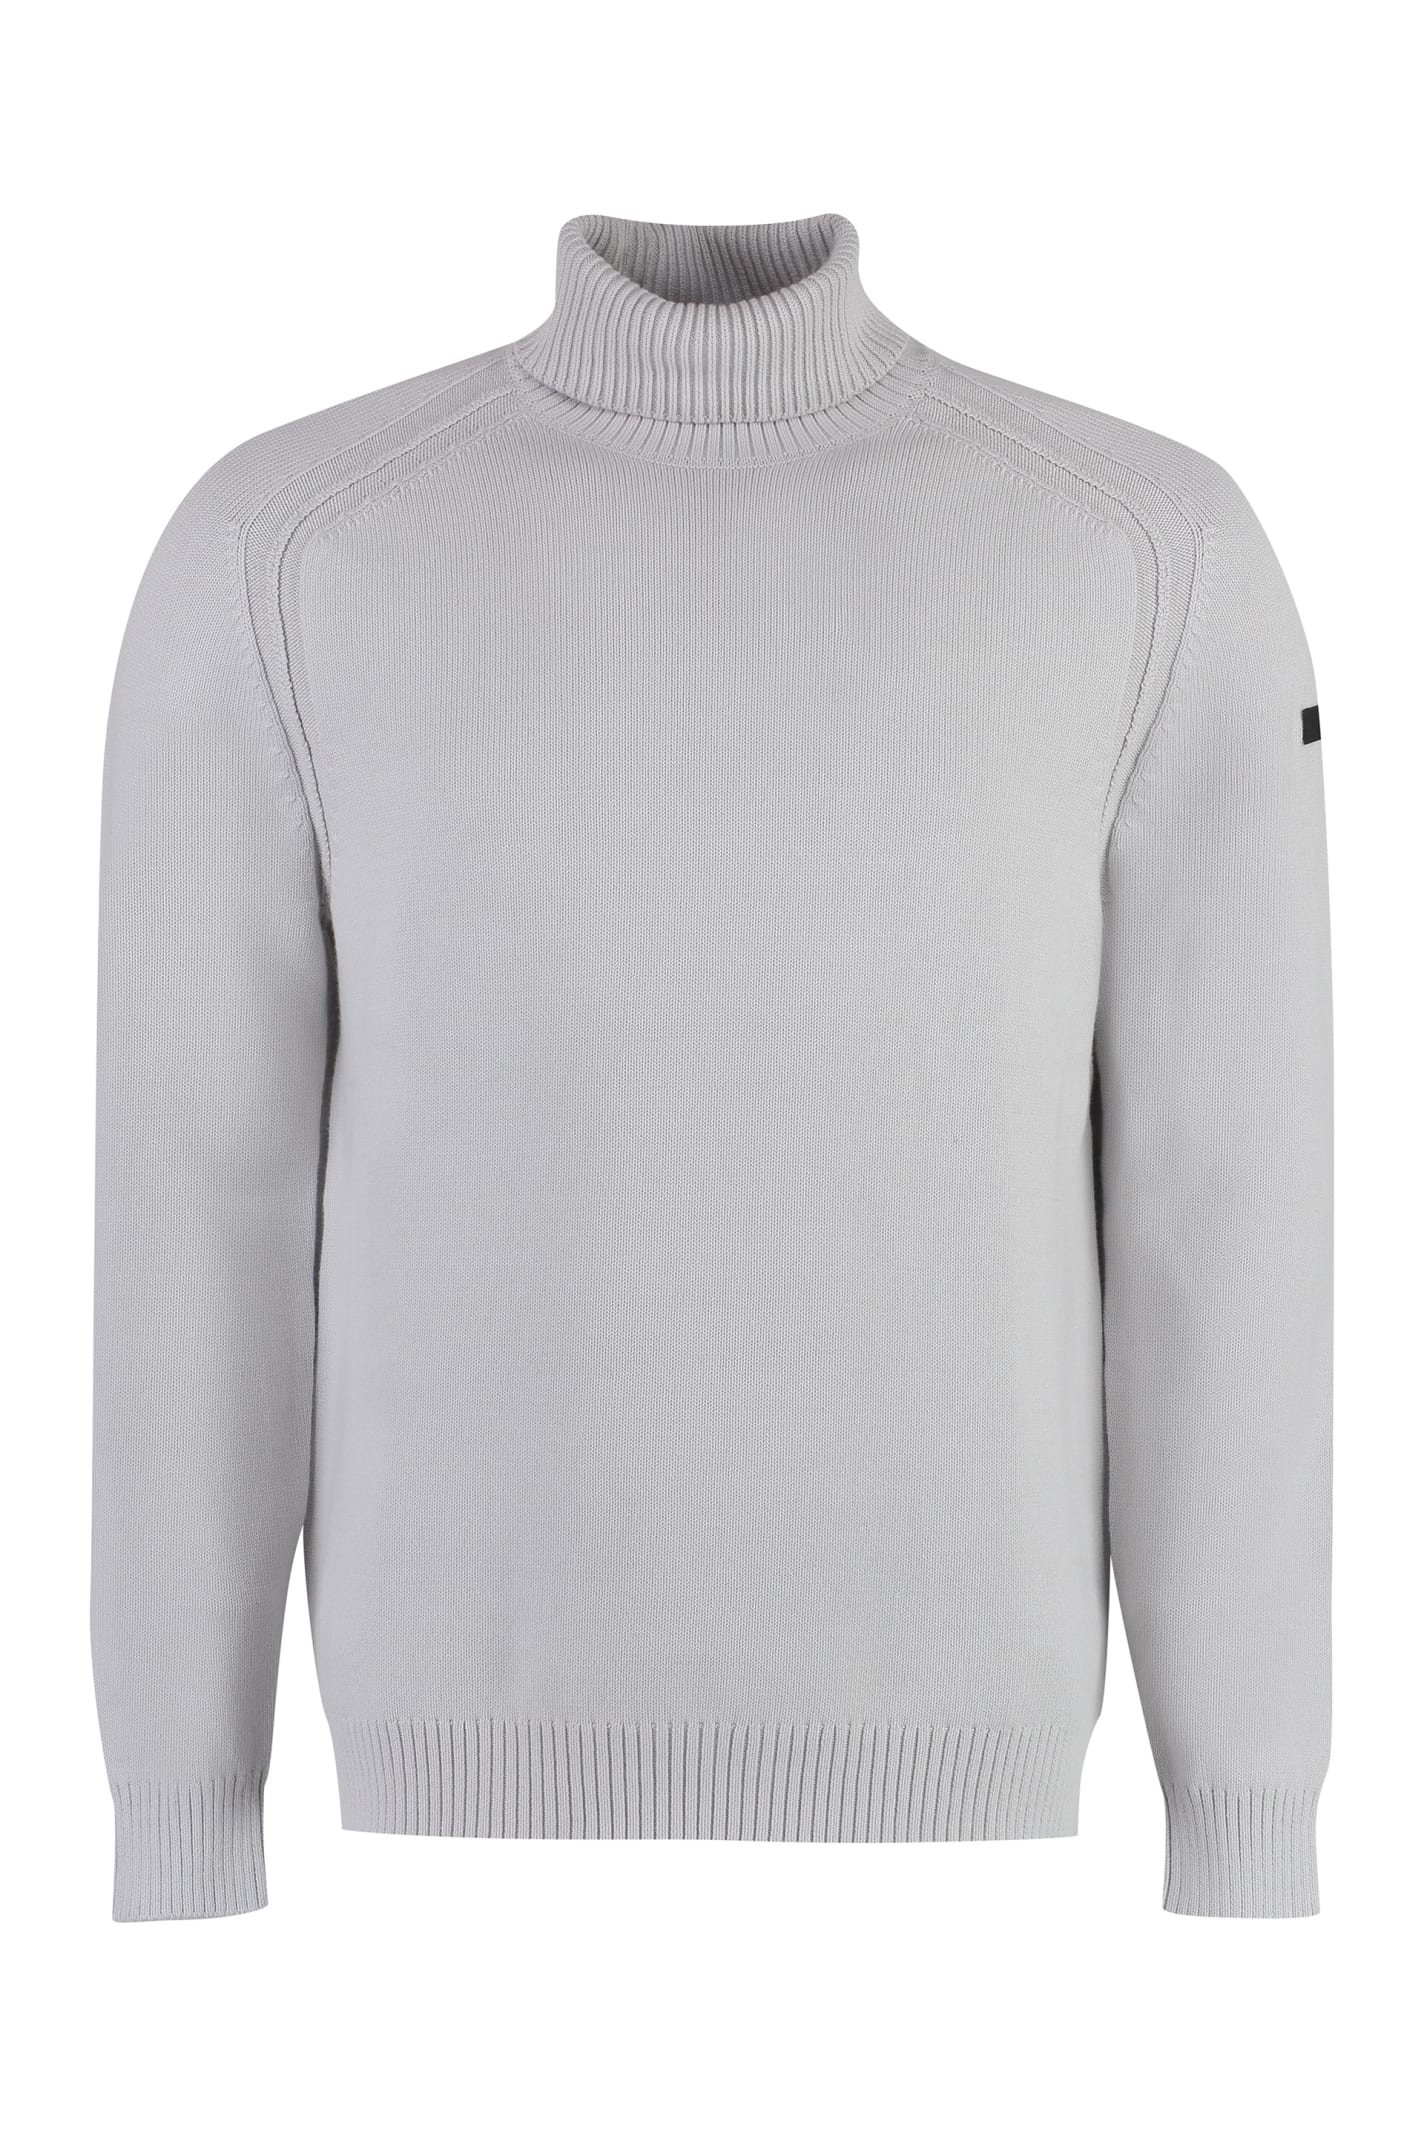 rrd - roberto ricci design cotton turtleneck sweater